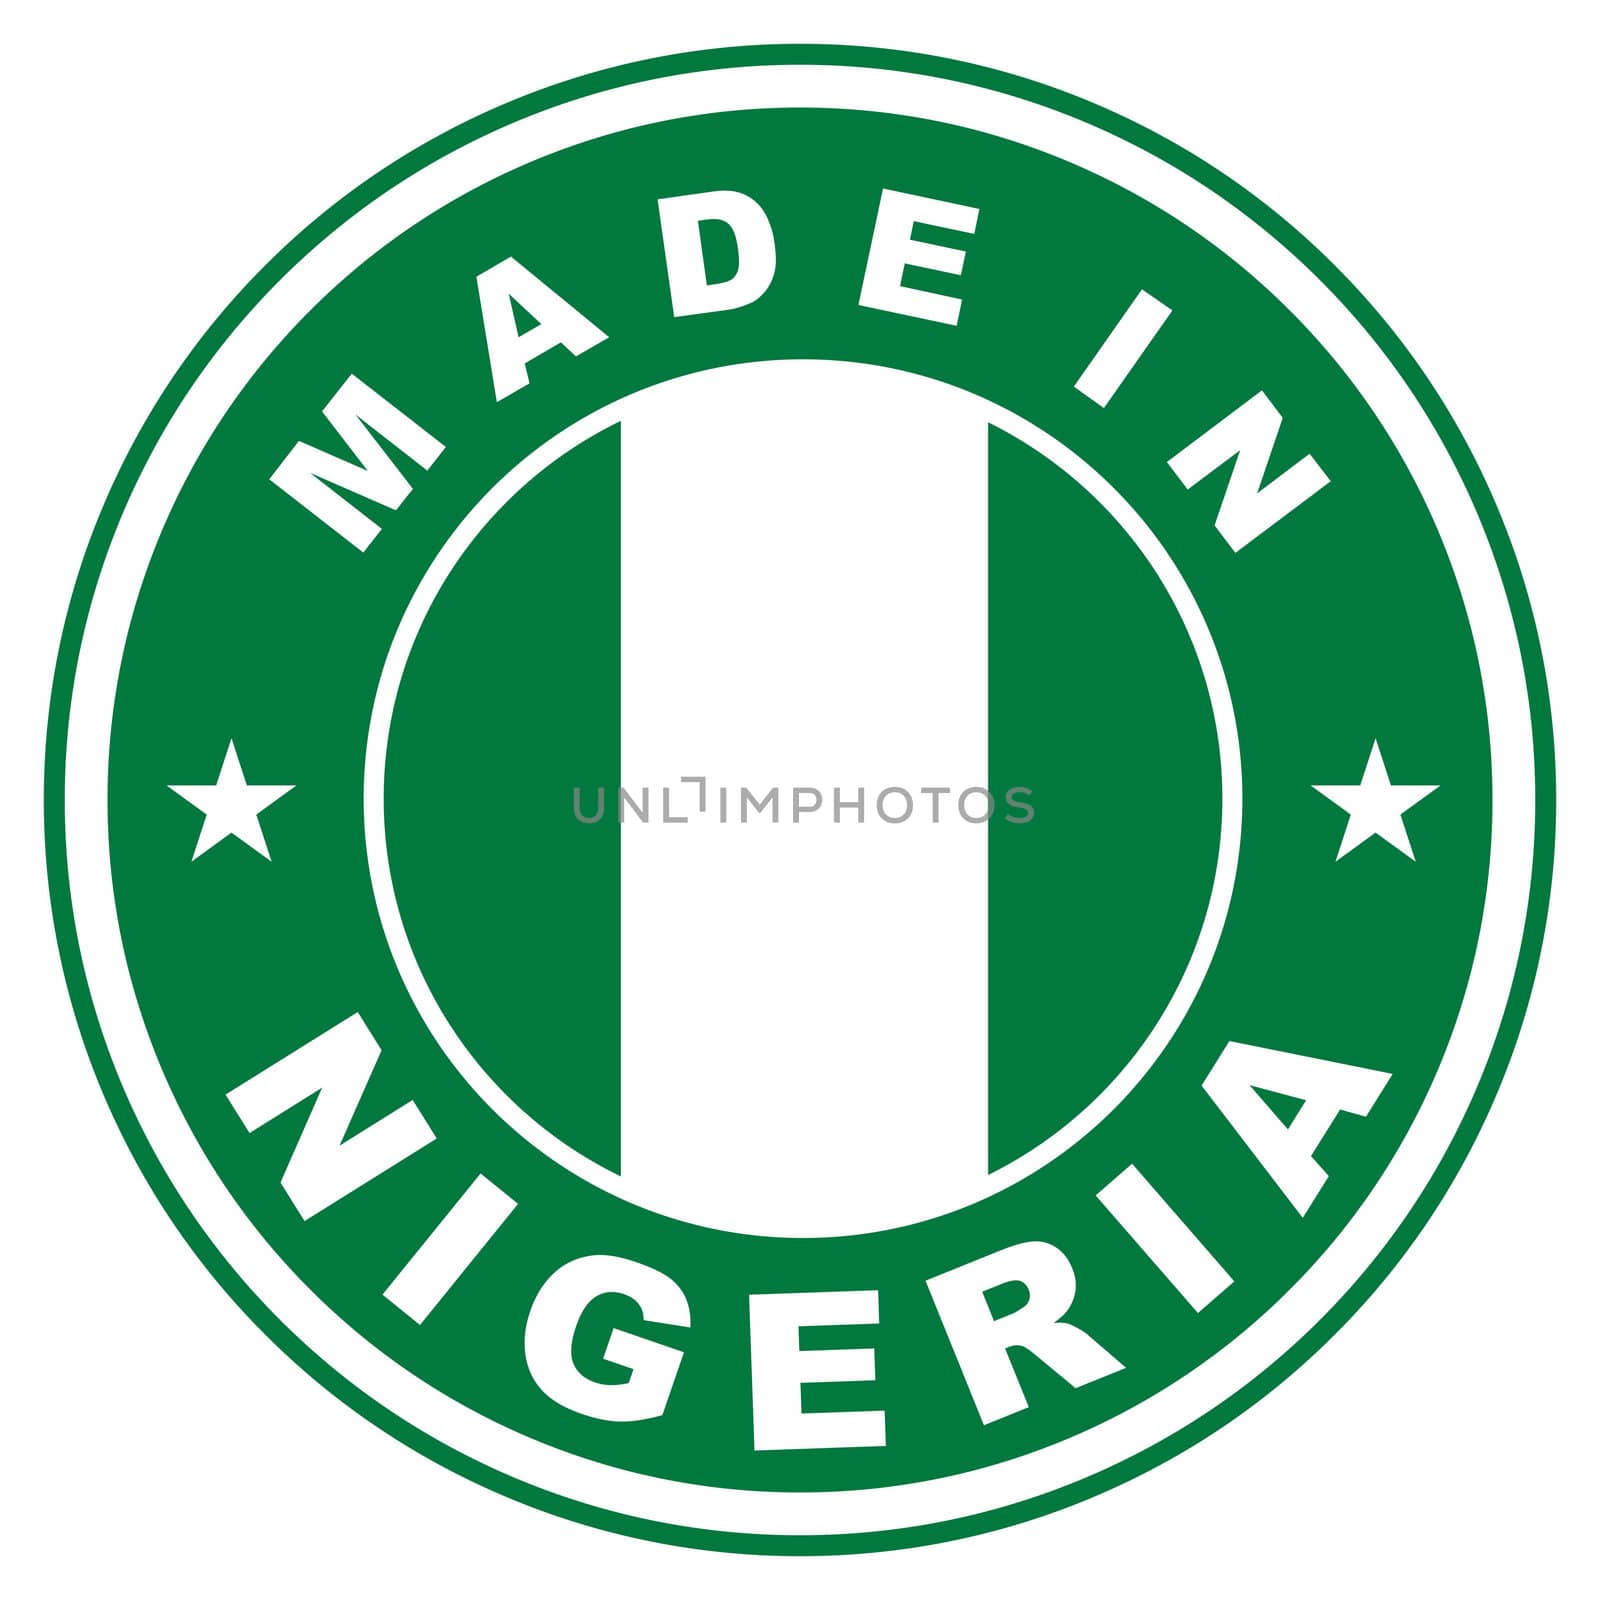 made in nigeria by tony4urban